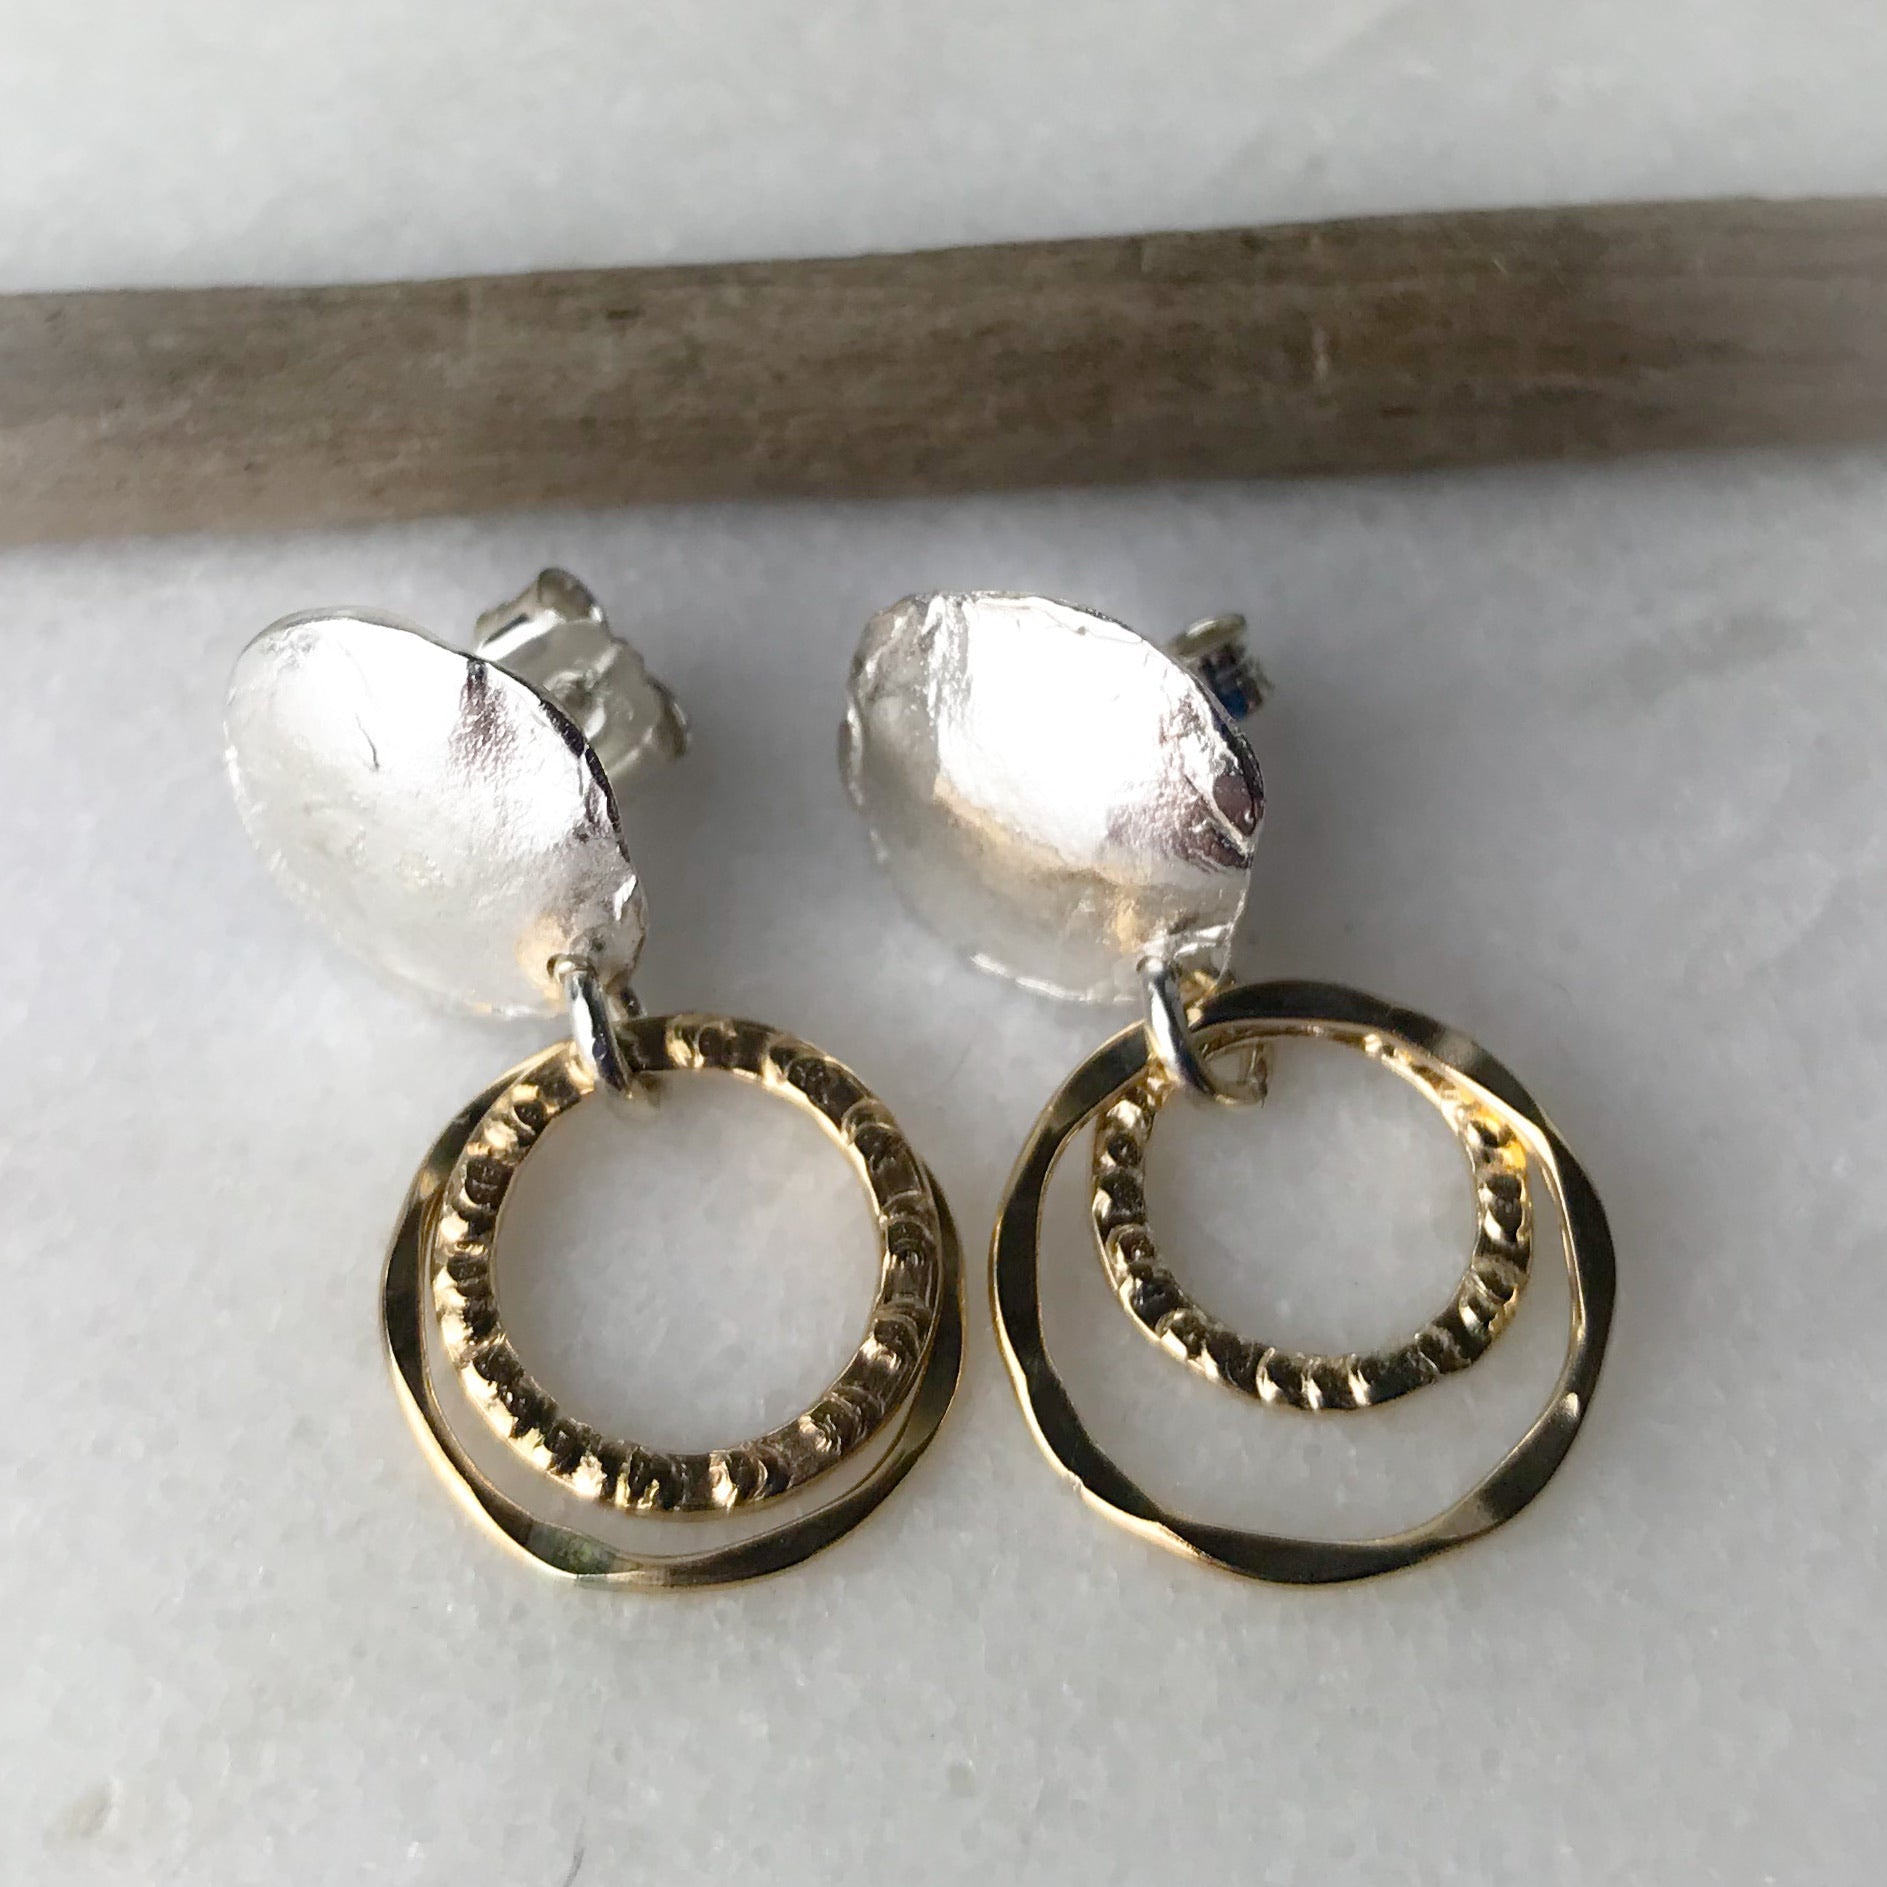 Circles Earrings - The Nancy Smillie Shop - Art, Jewellery & Designer Gifts Glasgow